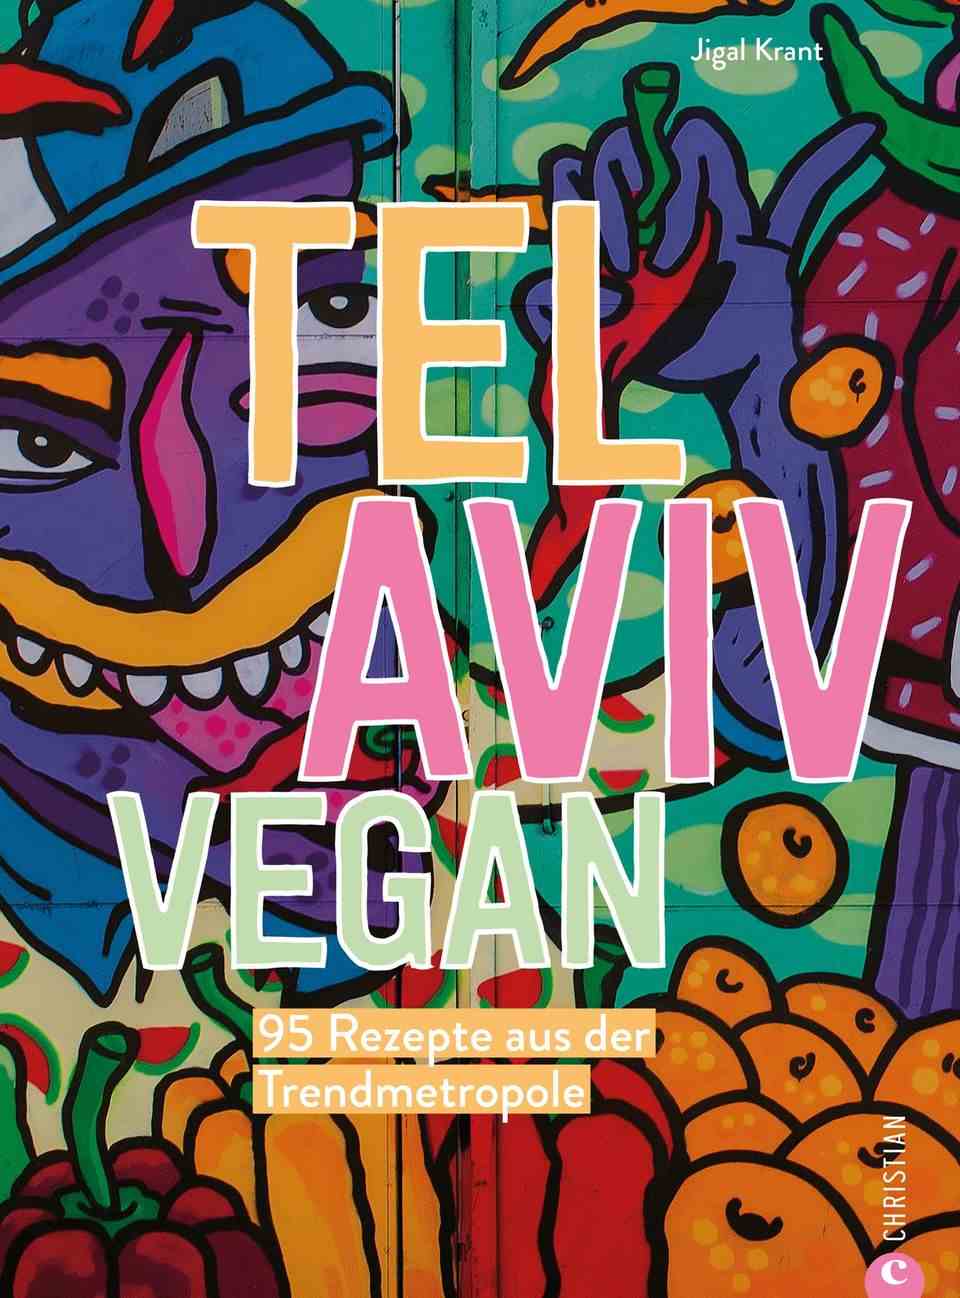 You can find more vegan recipes from Tel Aviv here: "Tel Aviv vegan" by Birgit van der Avoort.  Christian publisher.  320 pages.  39.99 euros.